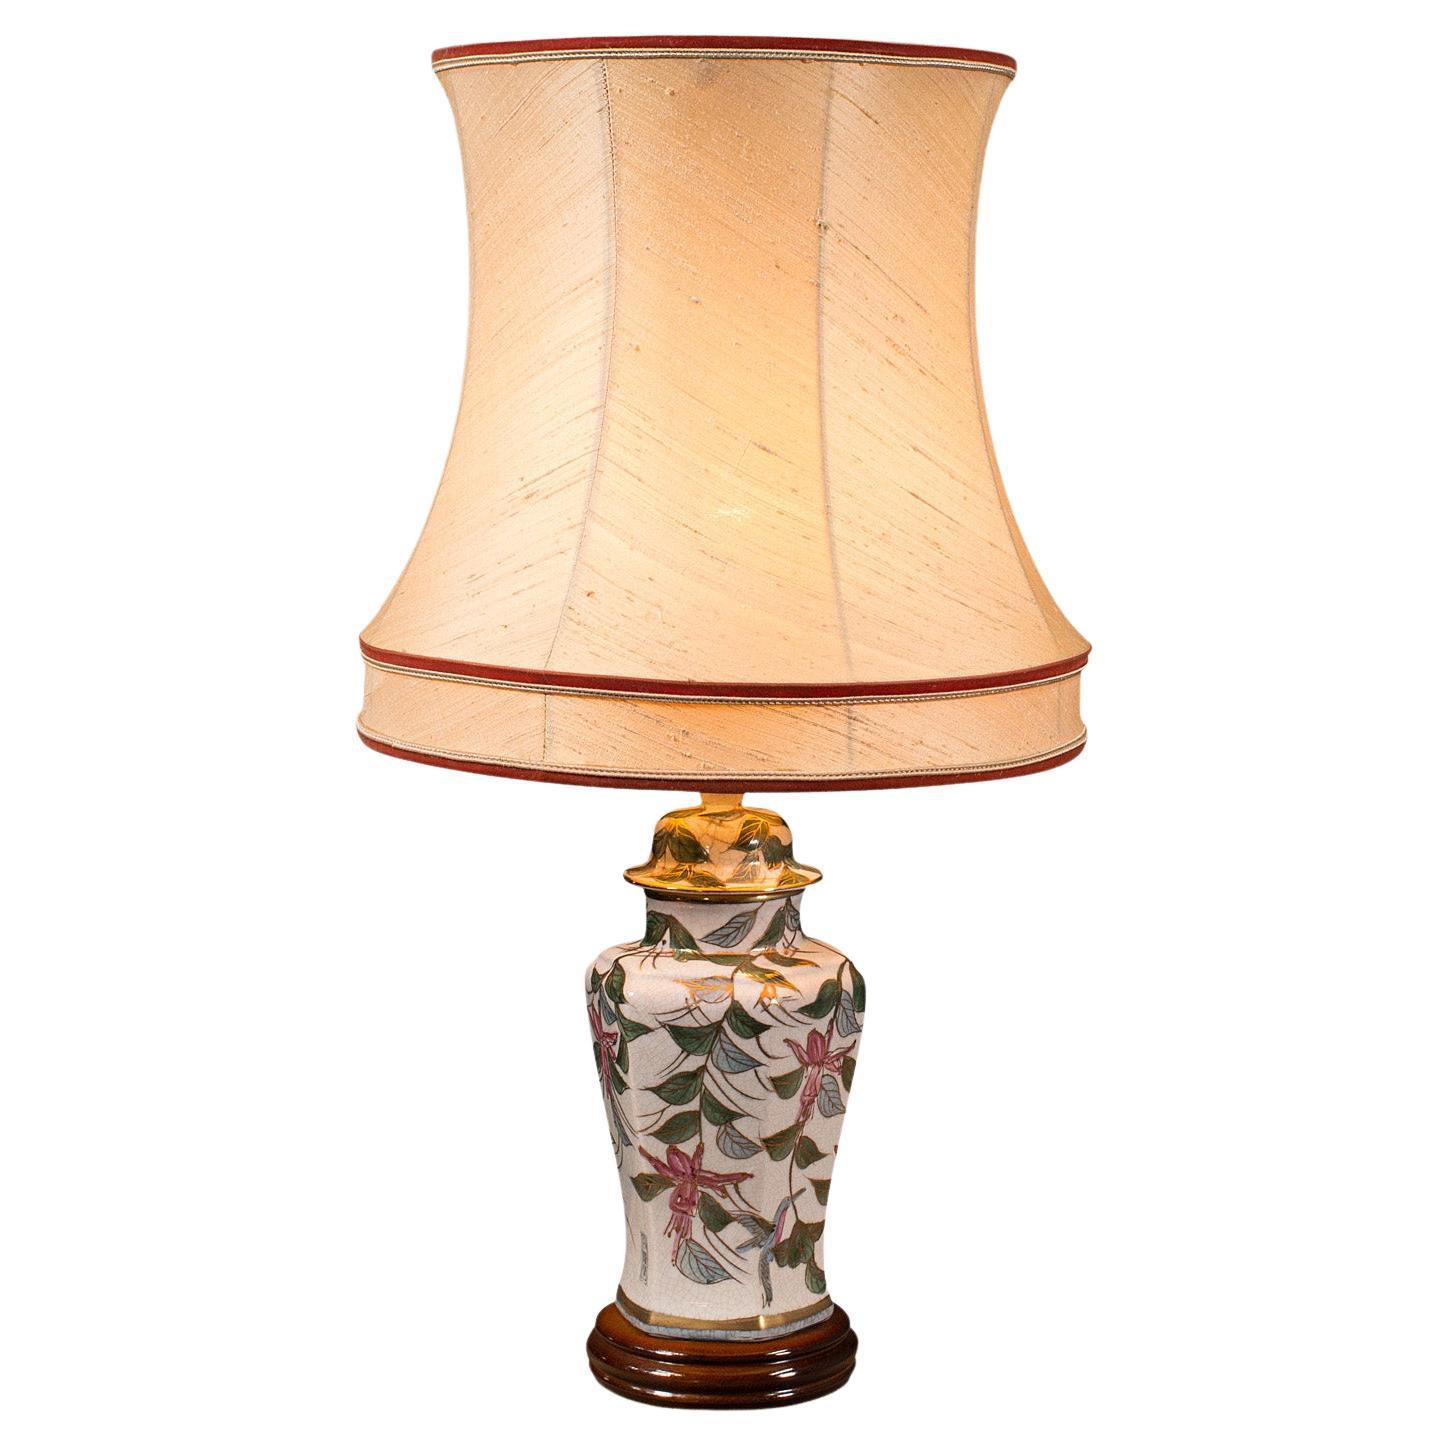 Vintage Table Lamp, Chinese, Ceramic, Decorative Light, Art Deco, Circa 1940 For Sale